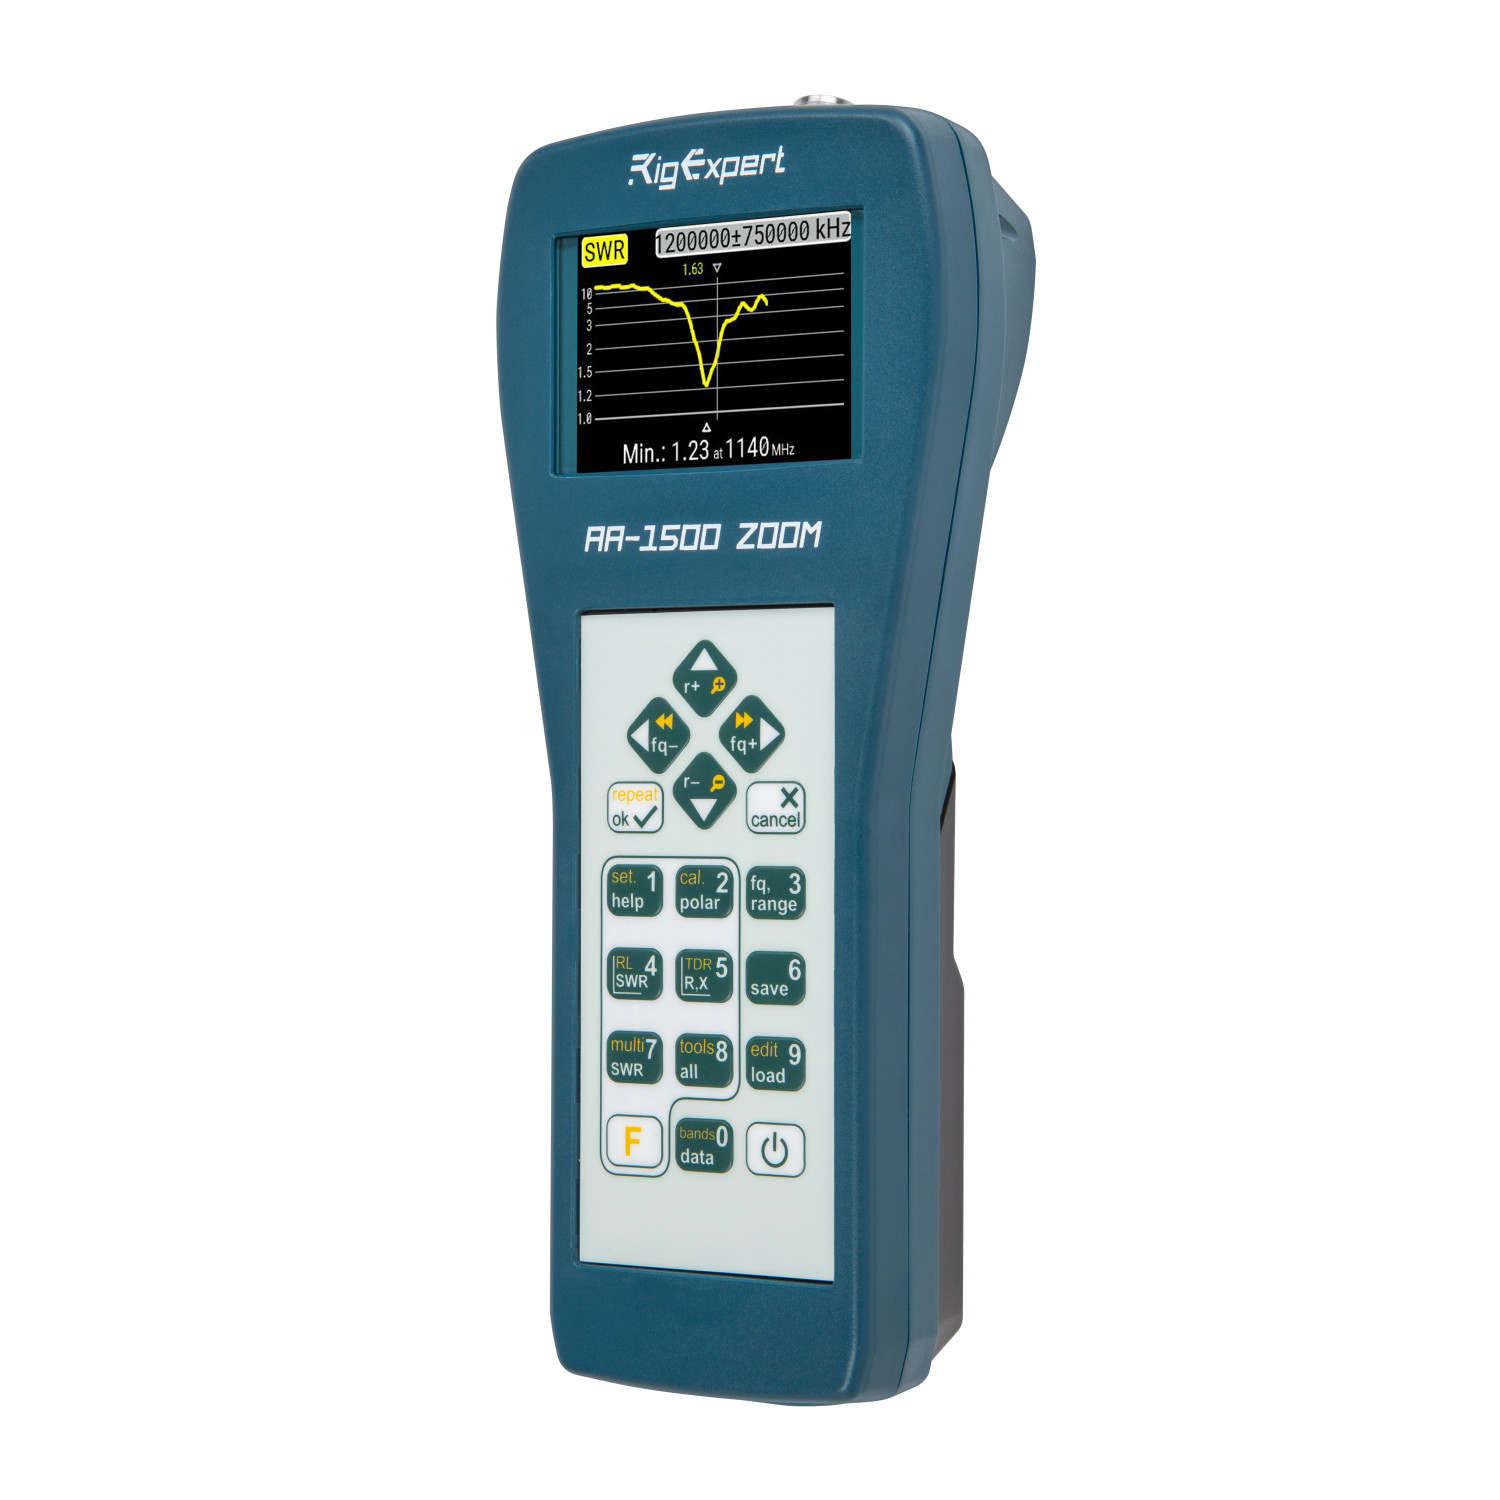 Антенний аналізатор RigExpert AA-1500 ZOOM